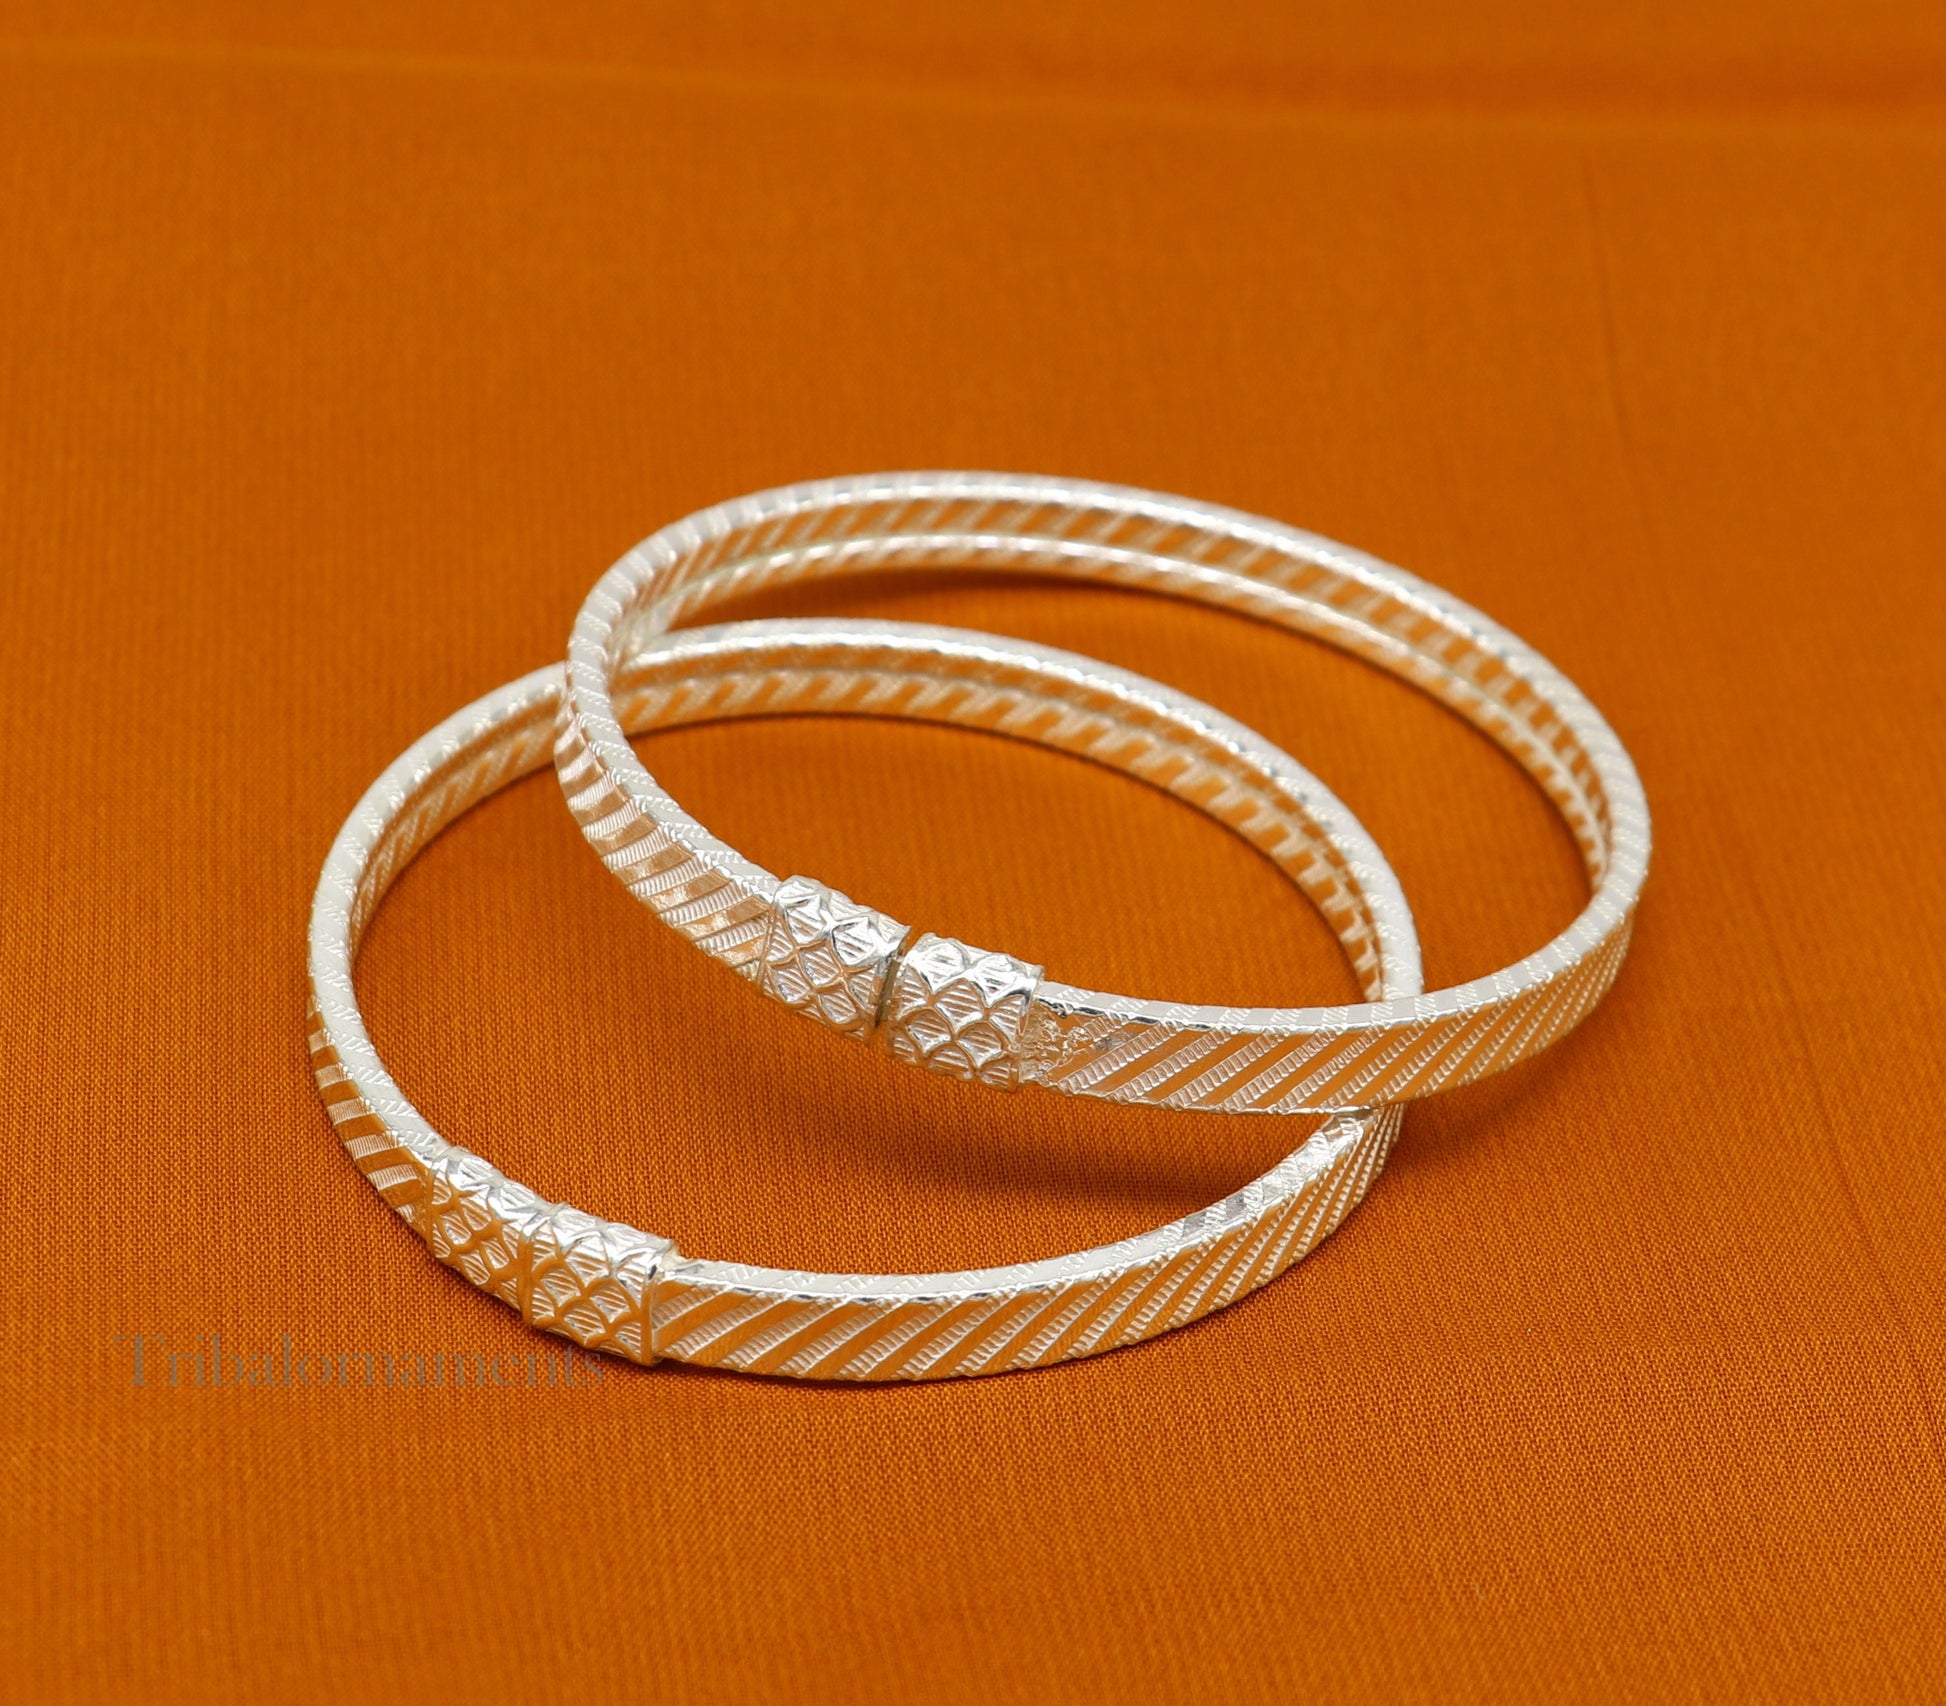 Vintage design Sterling silver amazing bangle bracelet kangan chudi, excellent customized design bangle kada gift tribal jewelry nba214 - TRIBAL ORNAMENTS